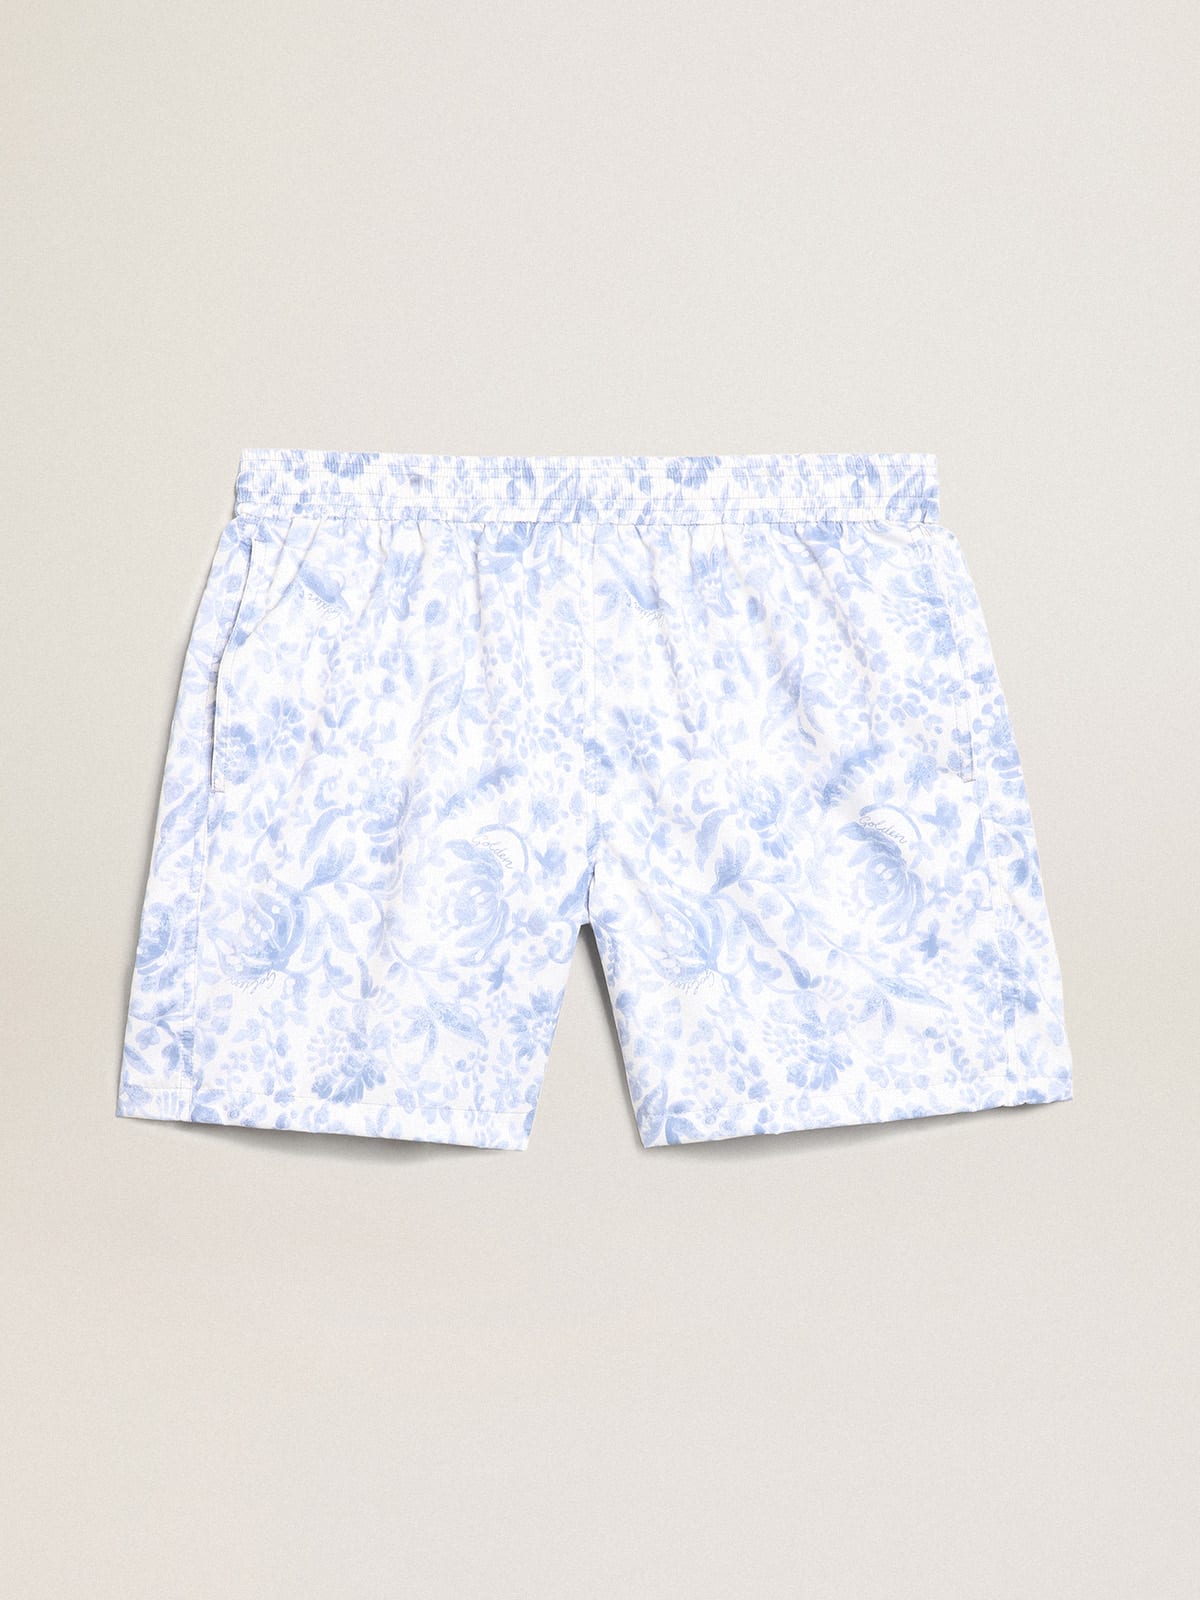 Resort Collection swim shorts with Mediterranean blue print